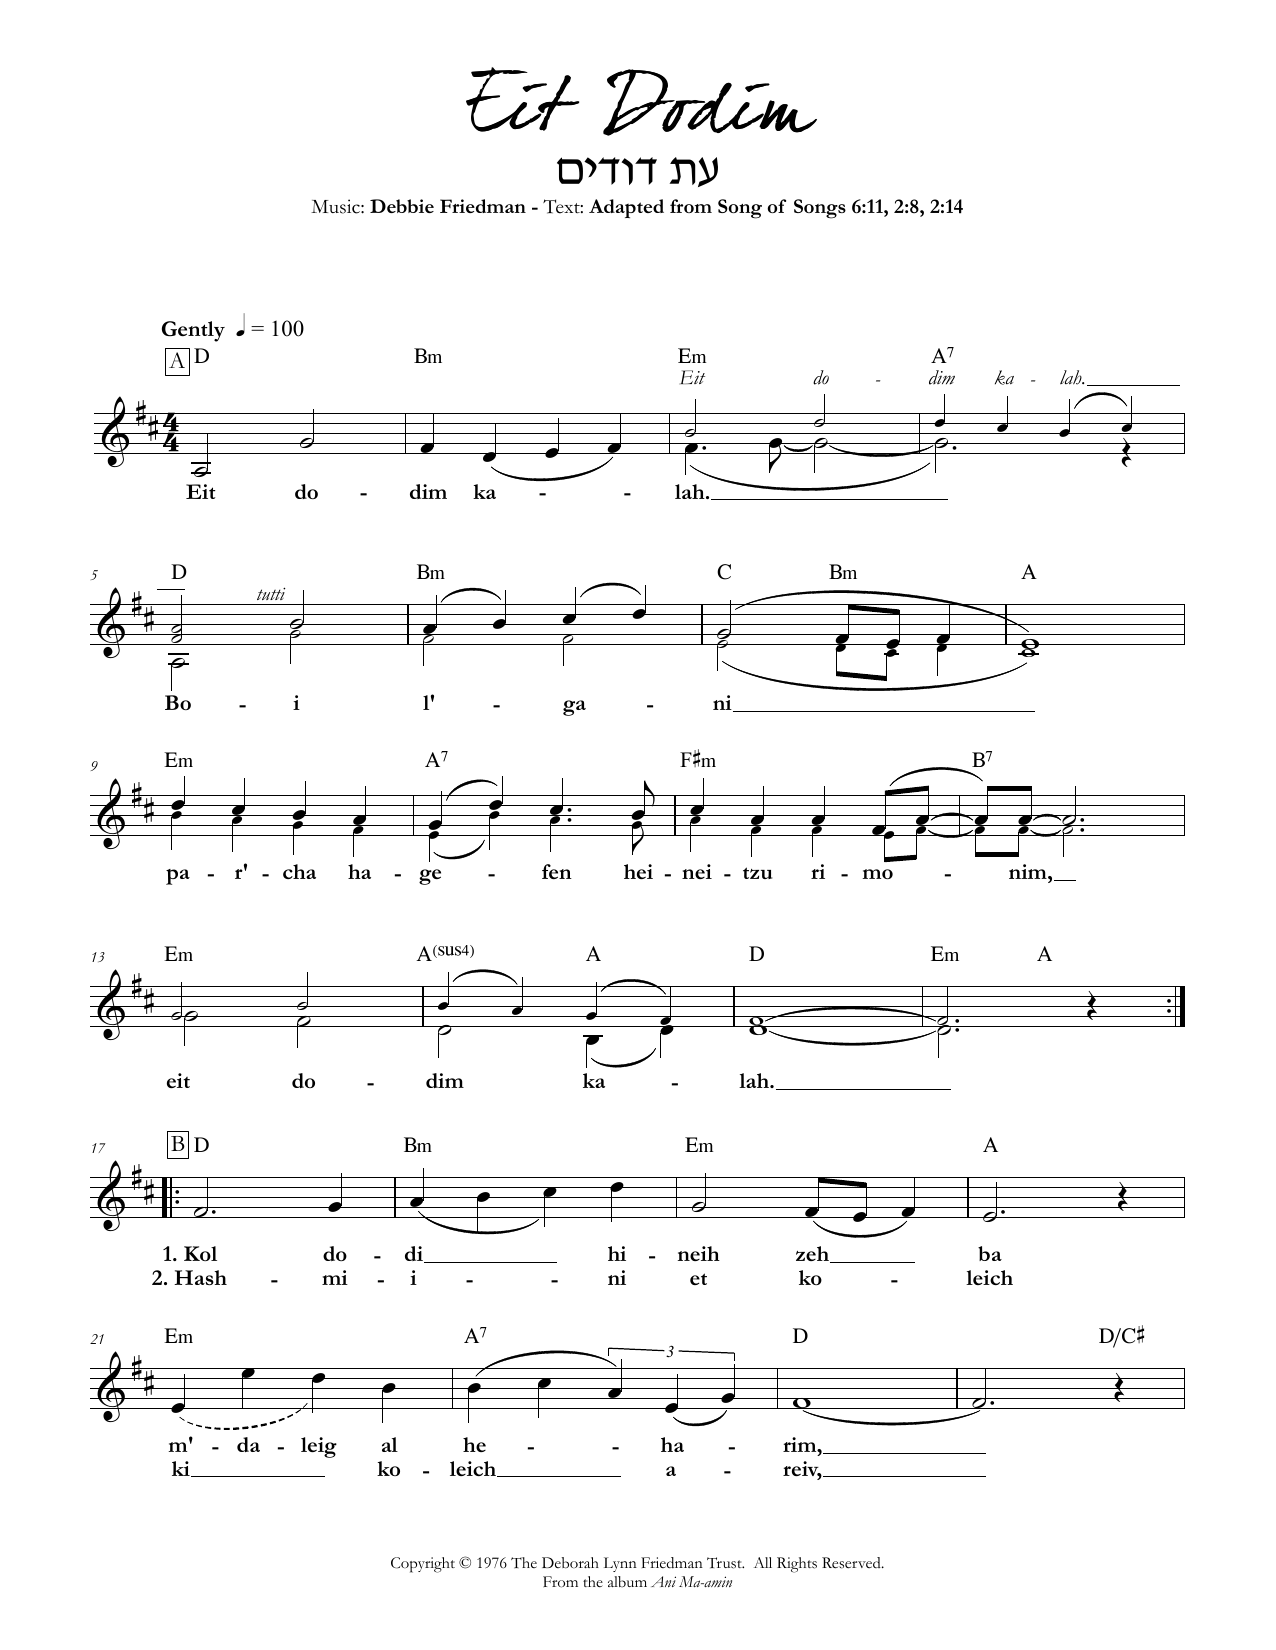 Debbie Friedman Eit Dodim Sheet Music Notes & Chords for Lead Sheet / Fake Book - Download or Print PDF